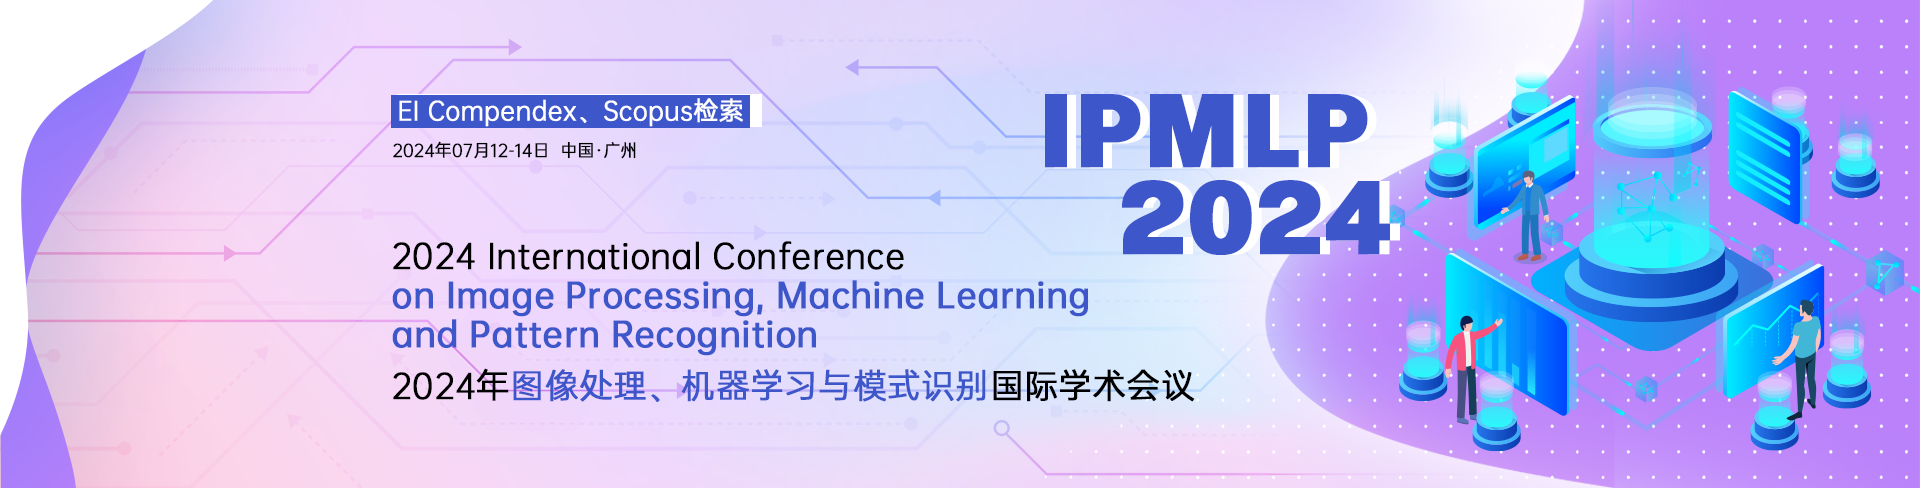 IPMLP 2024 艾思平台.png